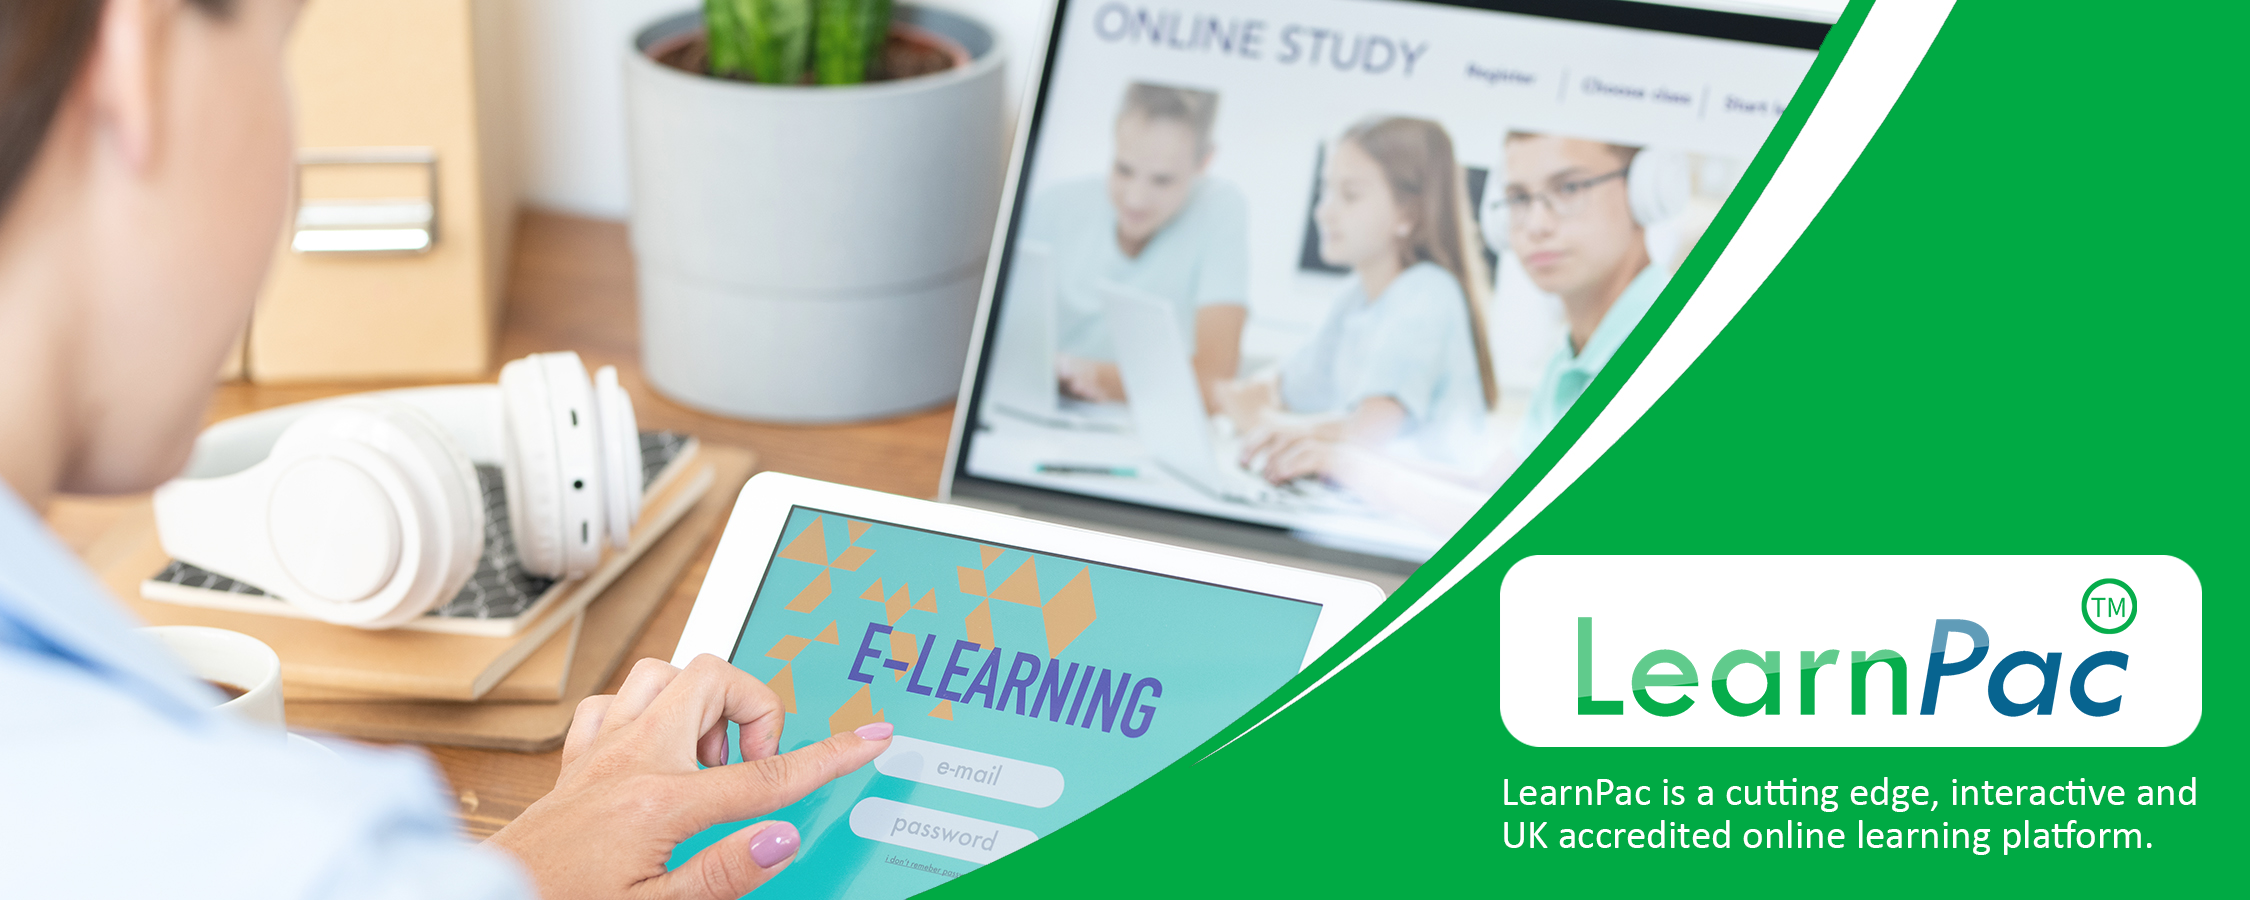 CV Writing Skills Training - Online Learning Courses - E-Learning Courses - LearnPac Systems UK -